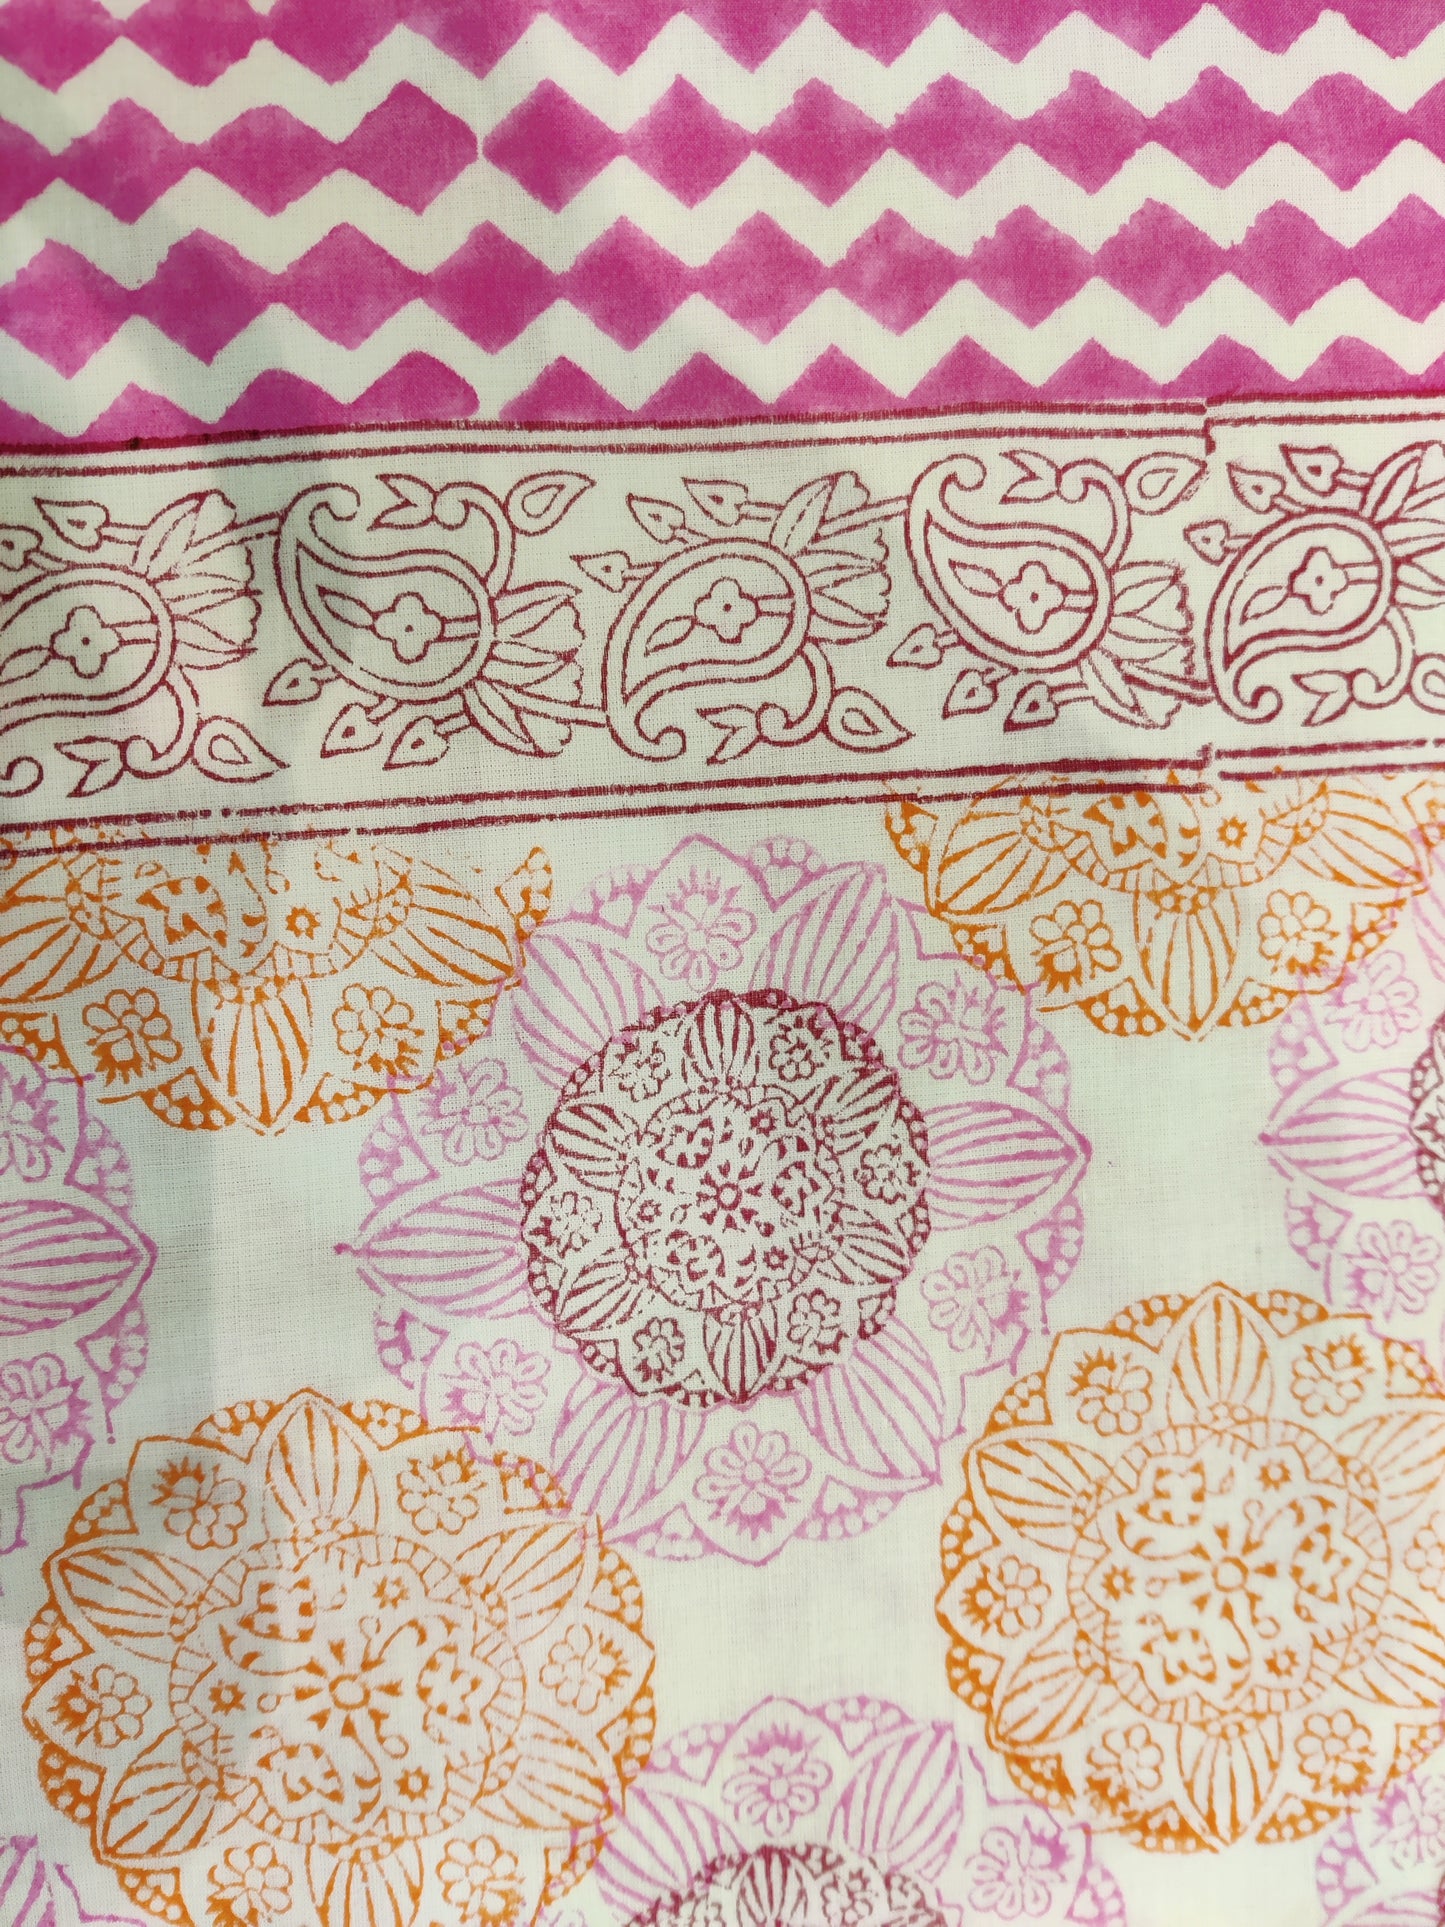 Cotton Blanket - Single Dohar ( 60 x 90 Inches) Orange-Pink Floral